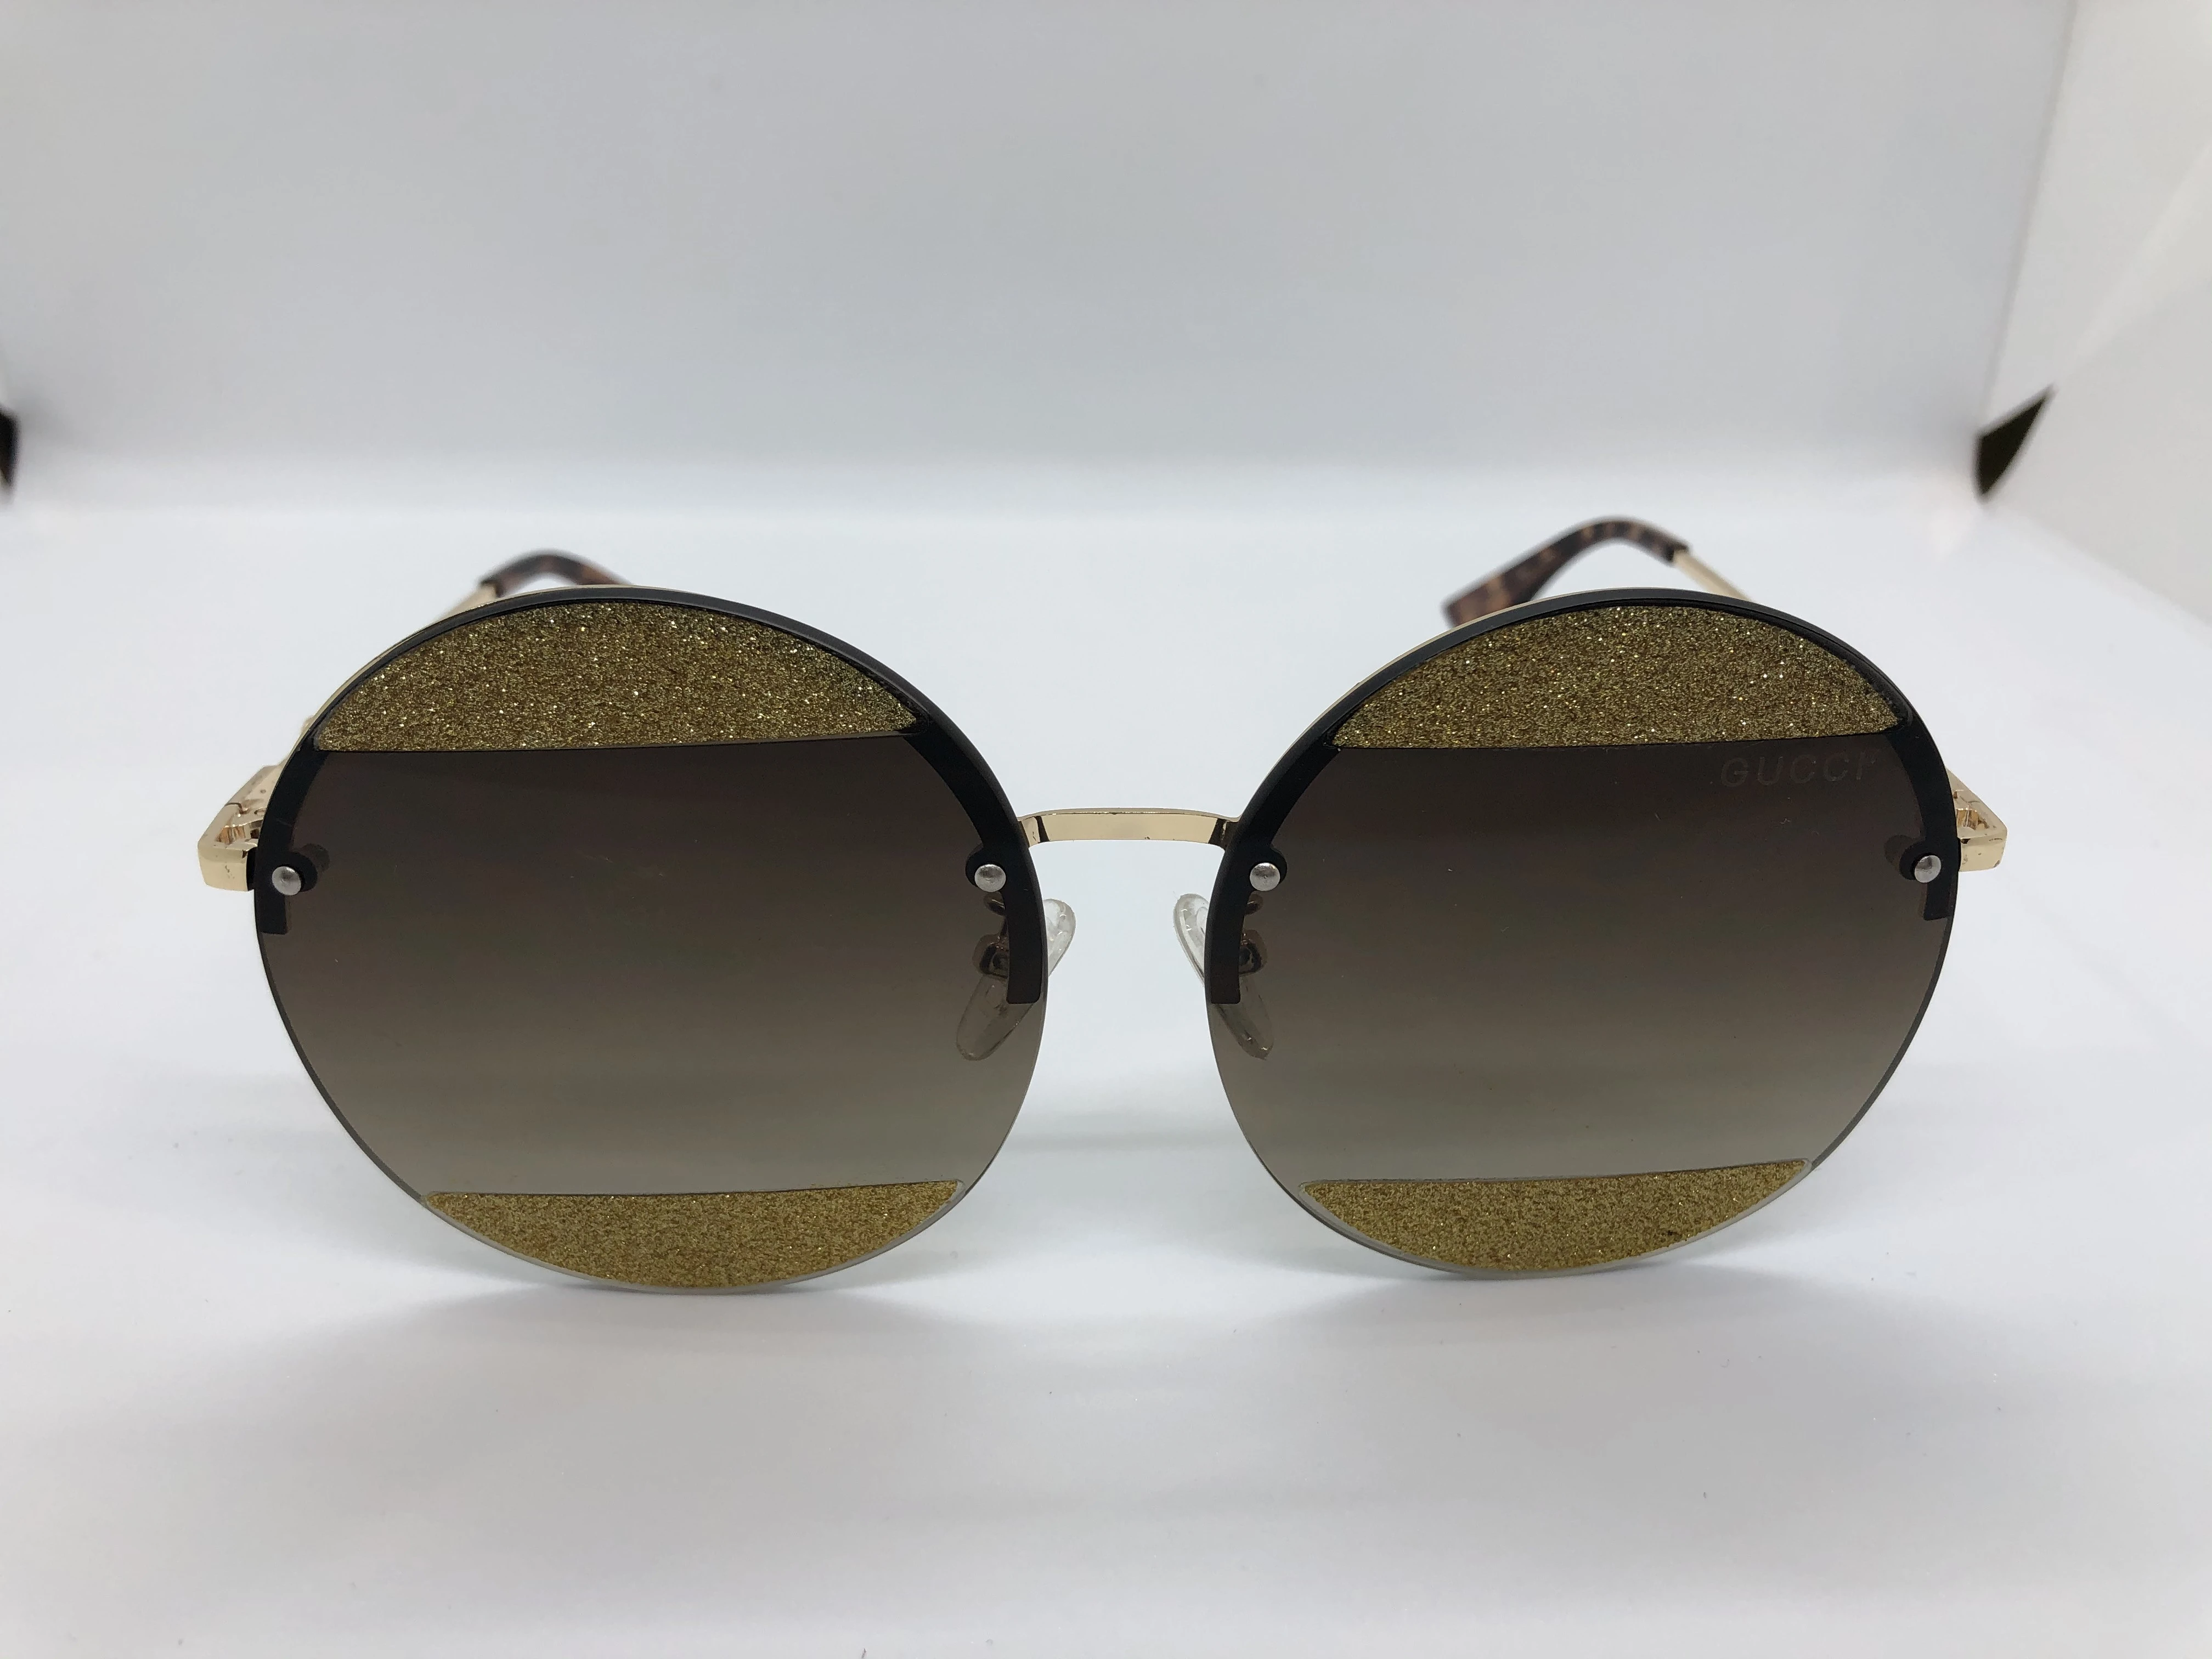 Gucci sunglasses - golden metal frame - golden bronze glossy transparent gradient lenses - golden metal arm - golden logo - for women